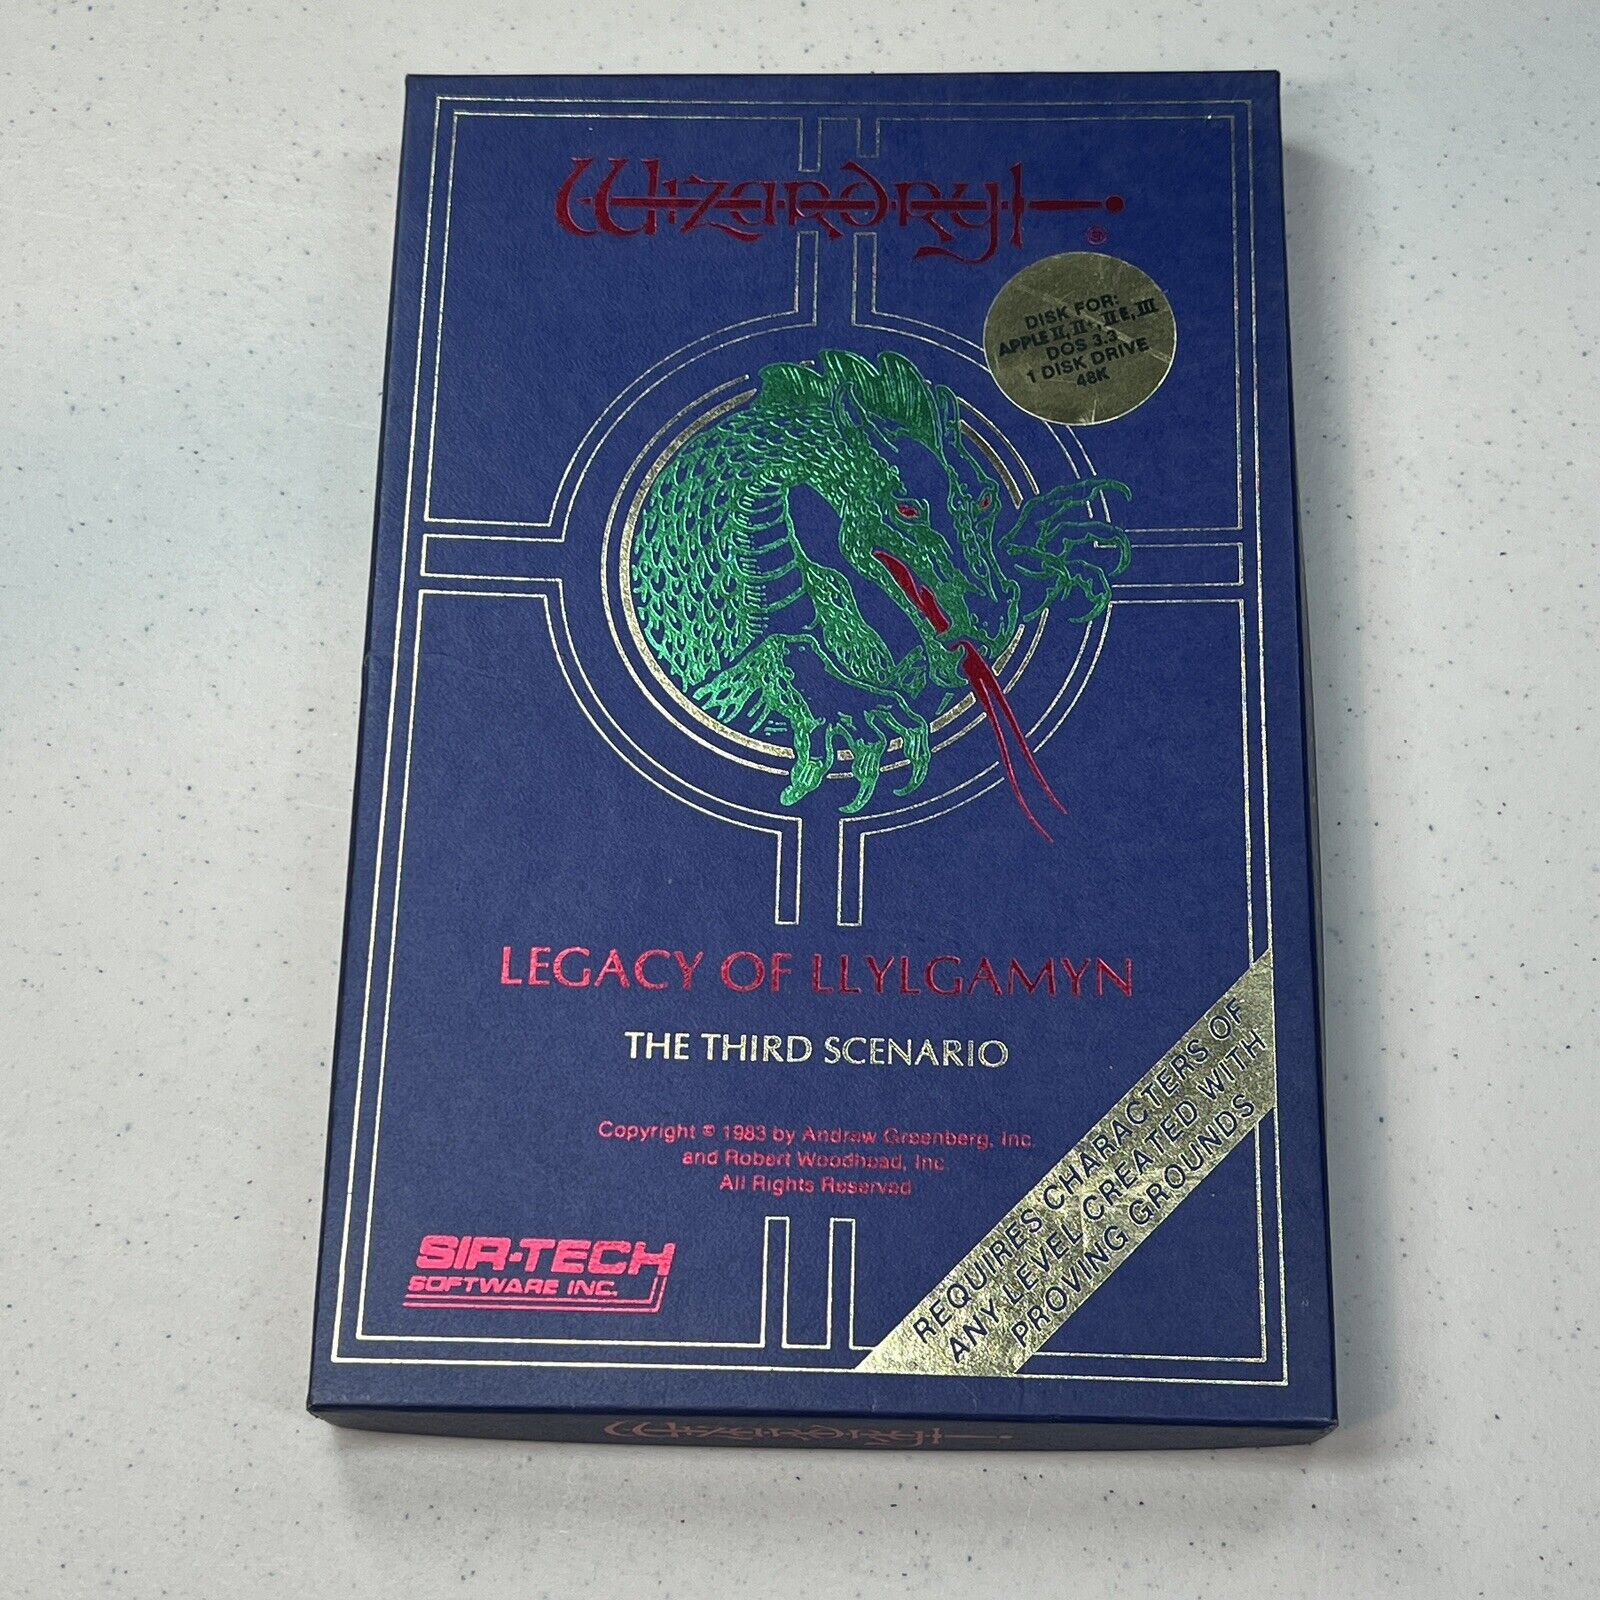 (NATIVE WORKING) Complete Wizardry 3 Legacy of LLylgamyn Apple II - Full Doc Set